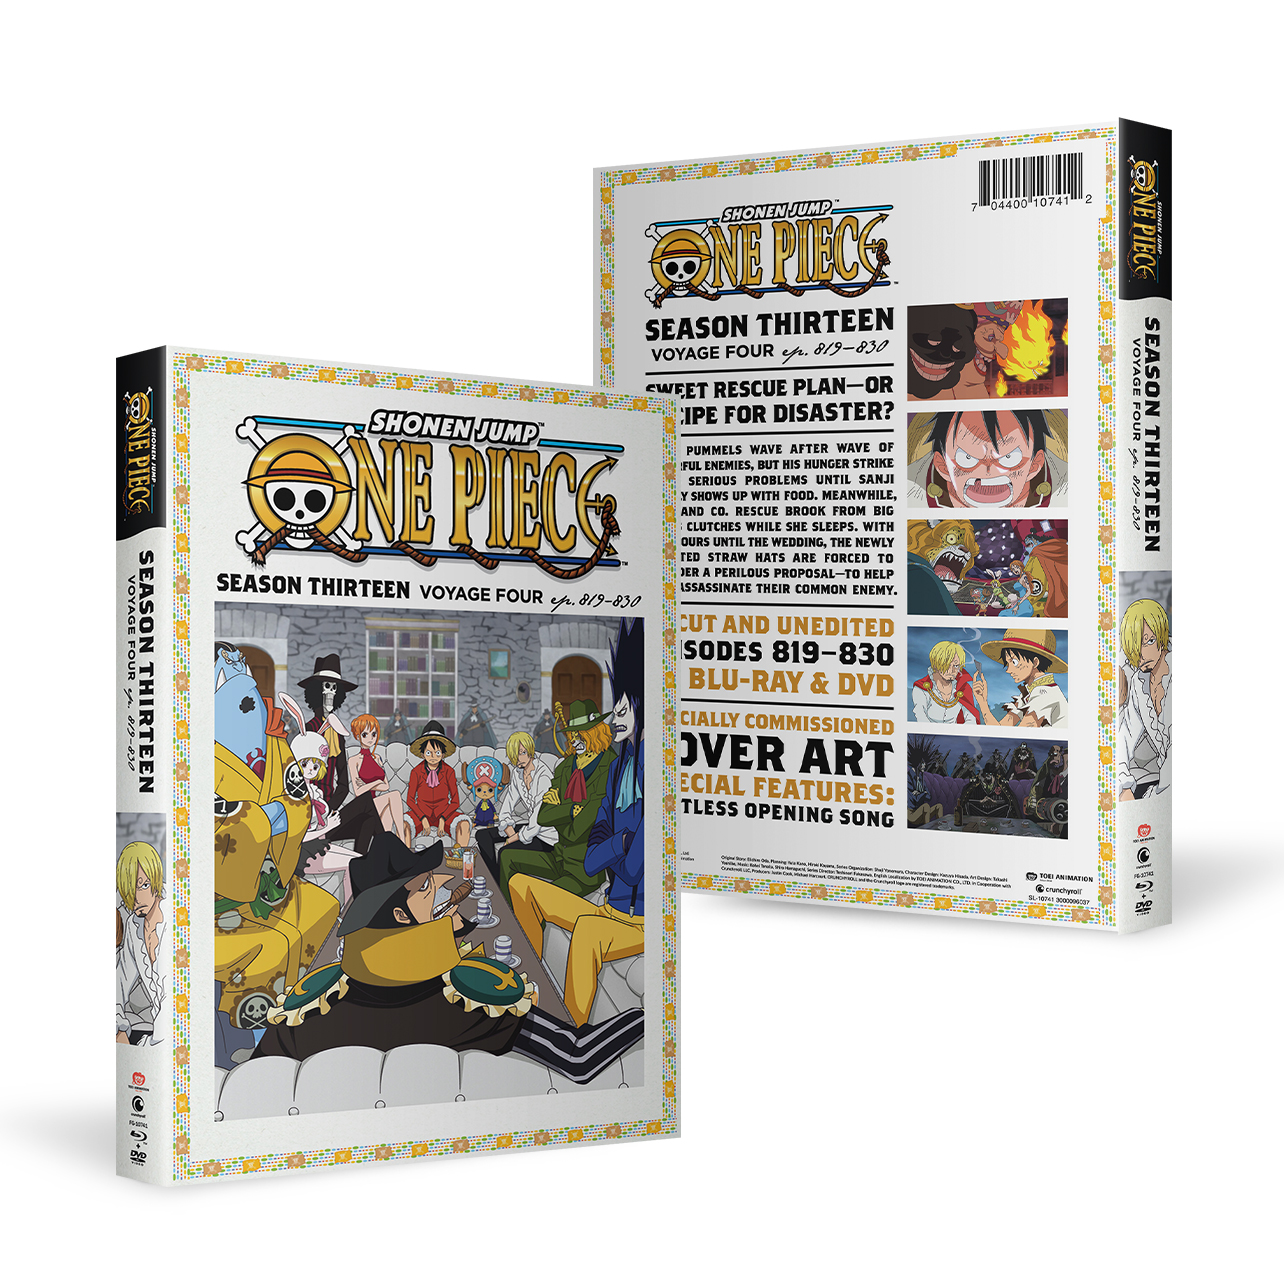 One Piece - Season 13 Voyage 4 - Blu-ray + DVD image count 0